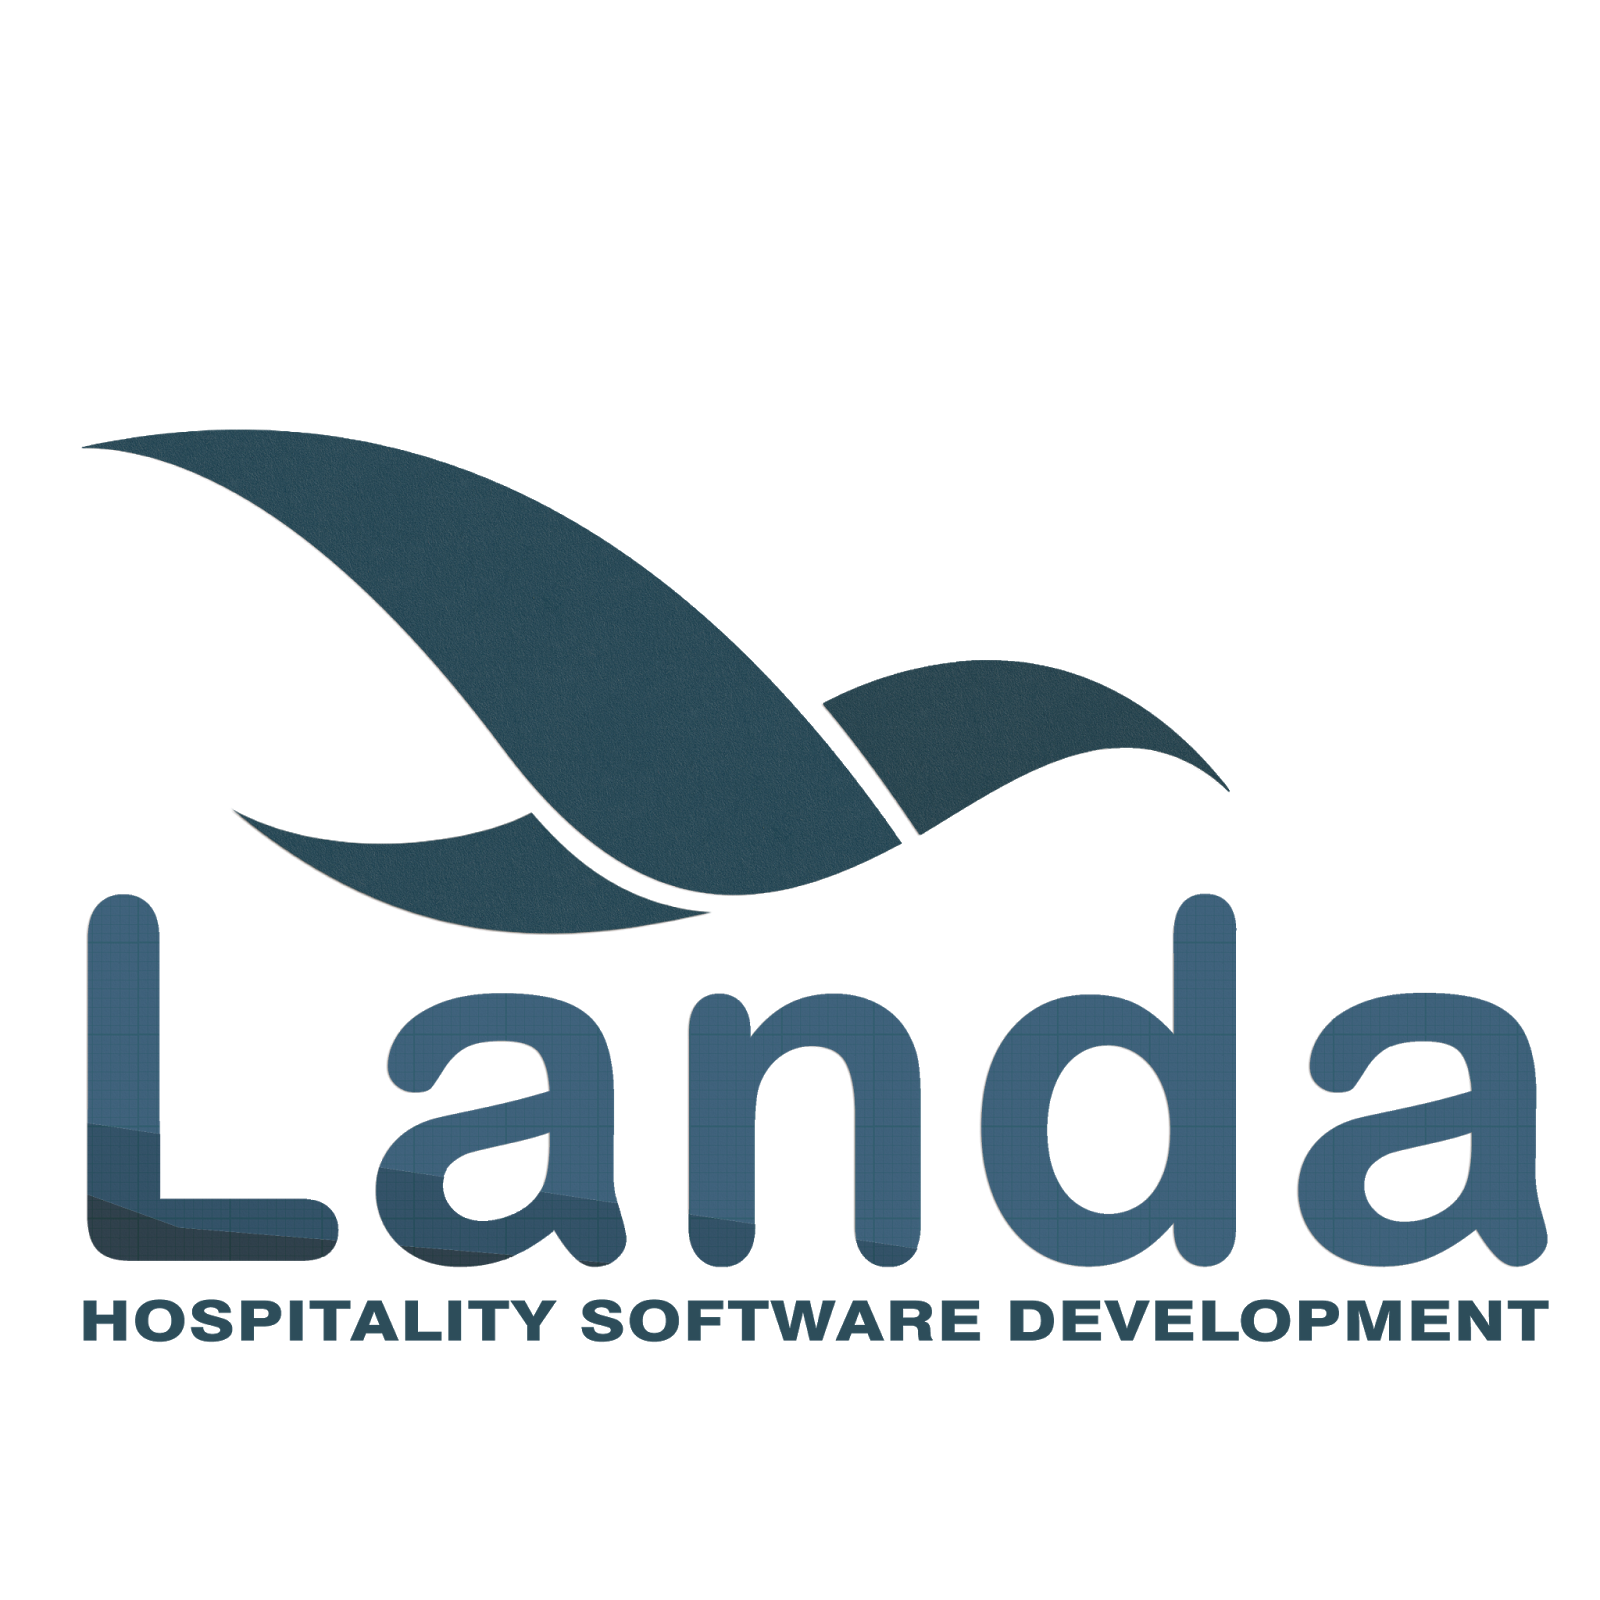 Landa Hospitality Software Development